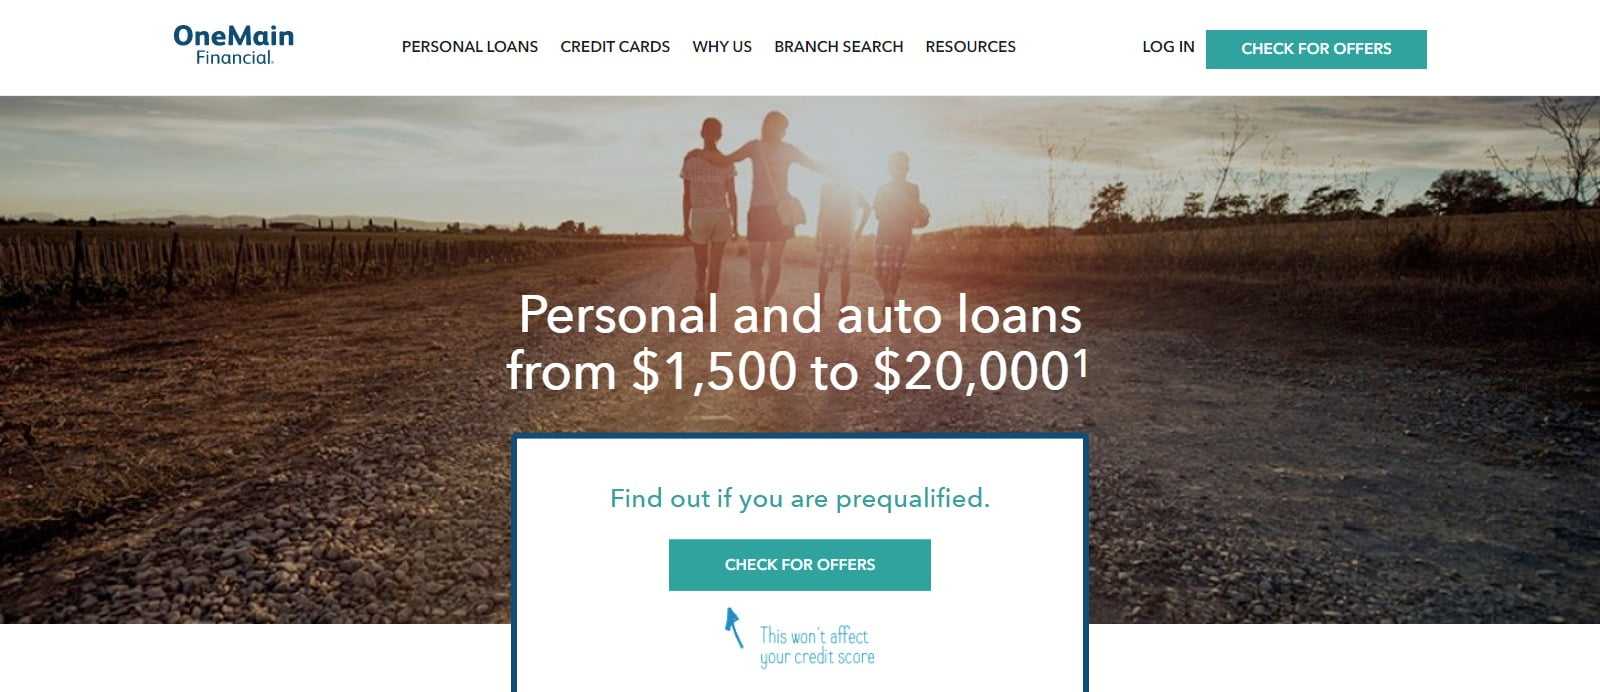 OneMain Financial Affiliate Program Review: $7 - $15 per Personal Loan Application